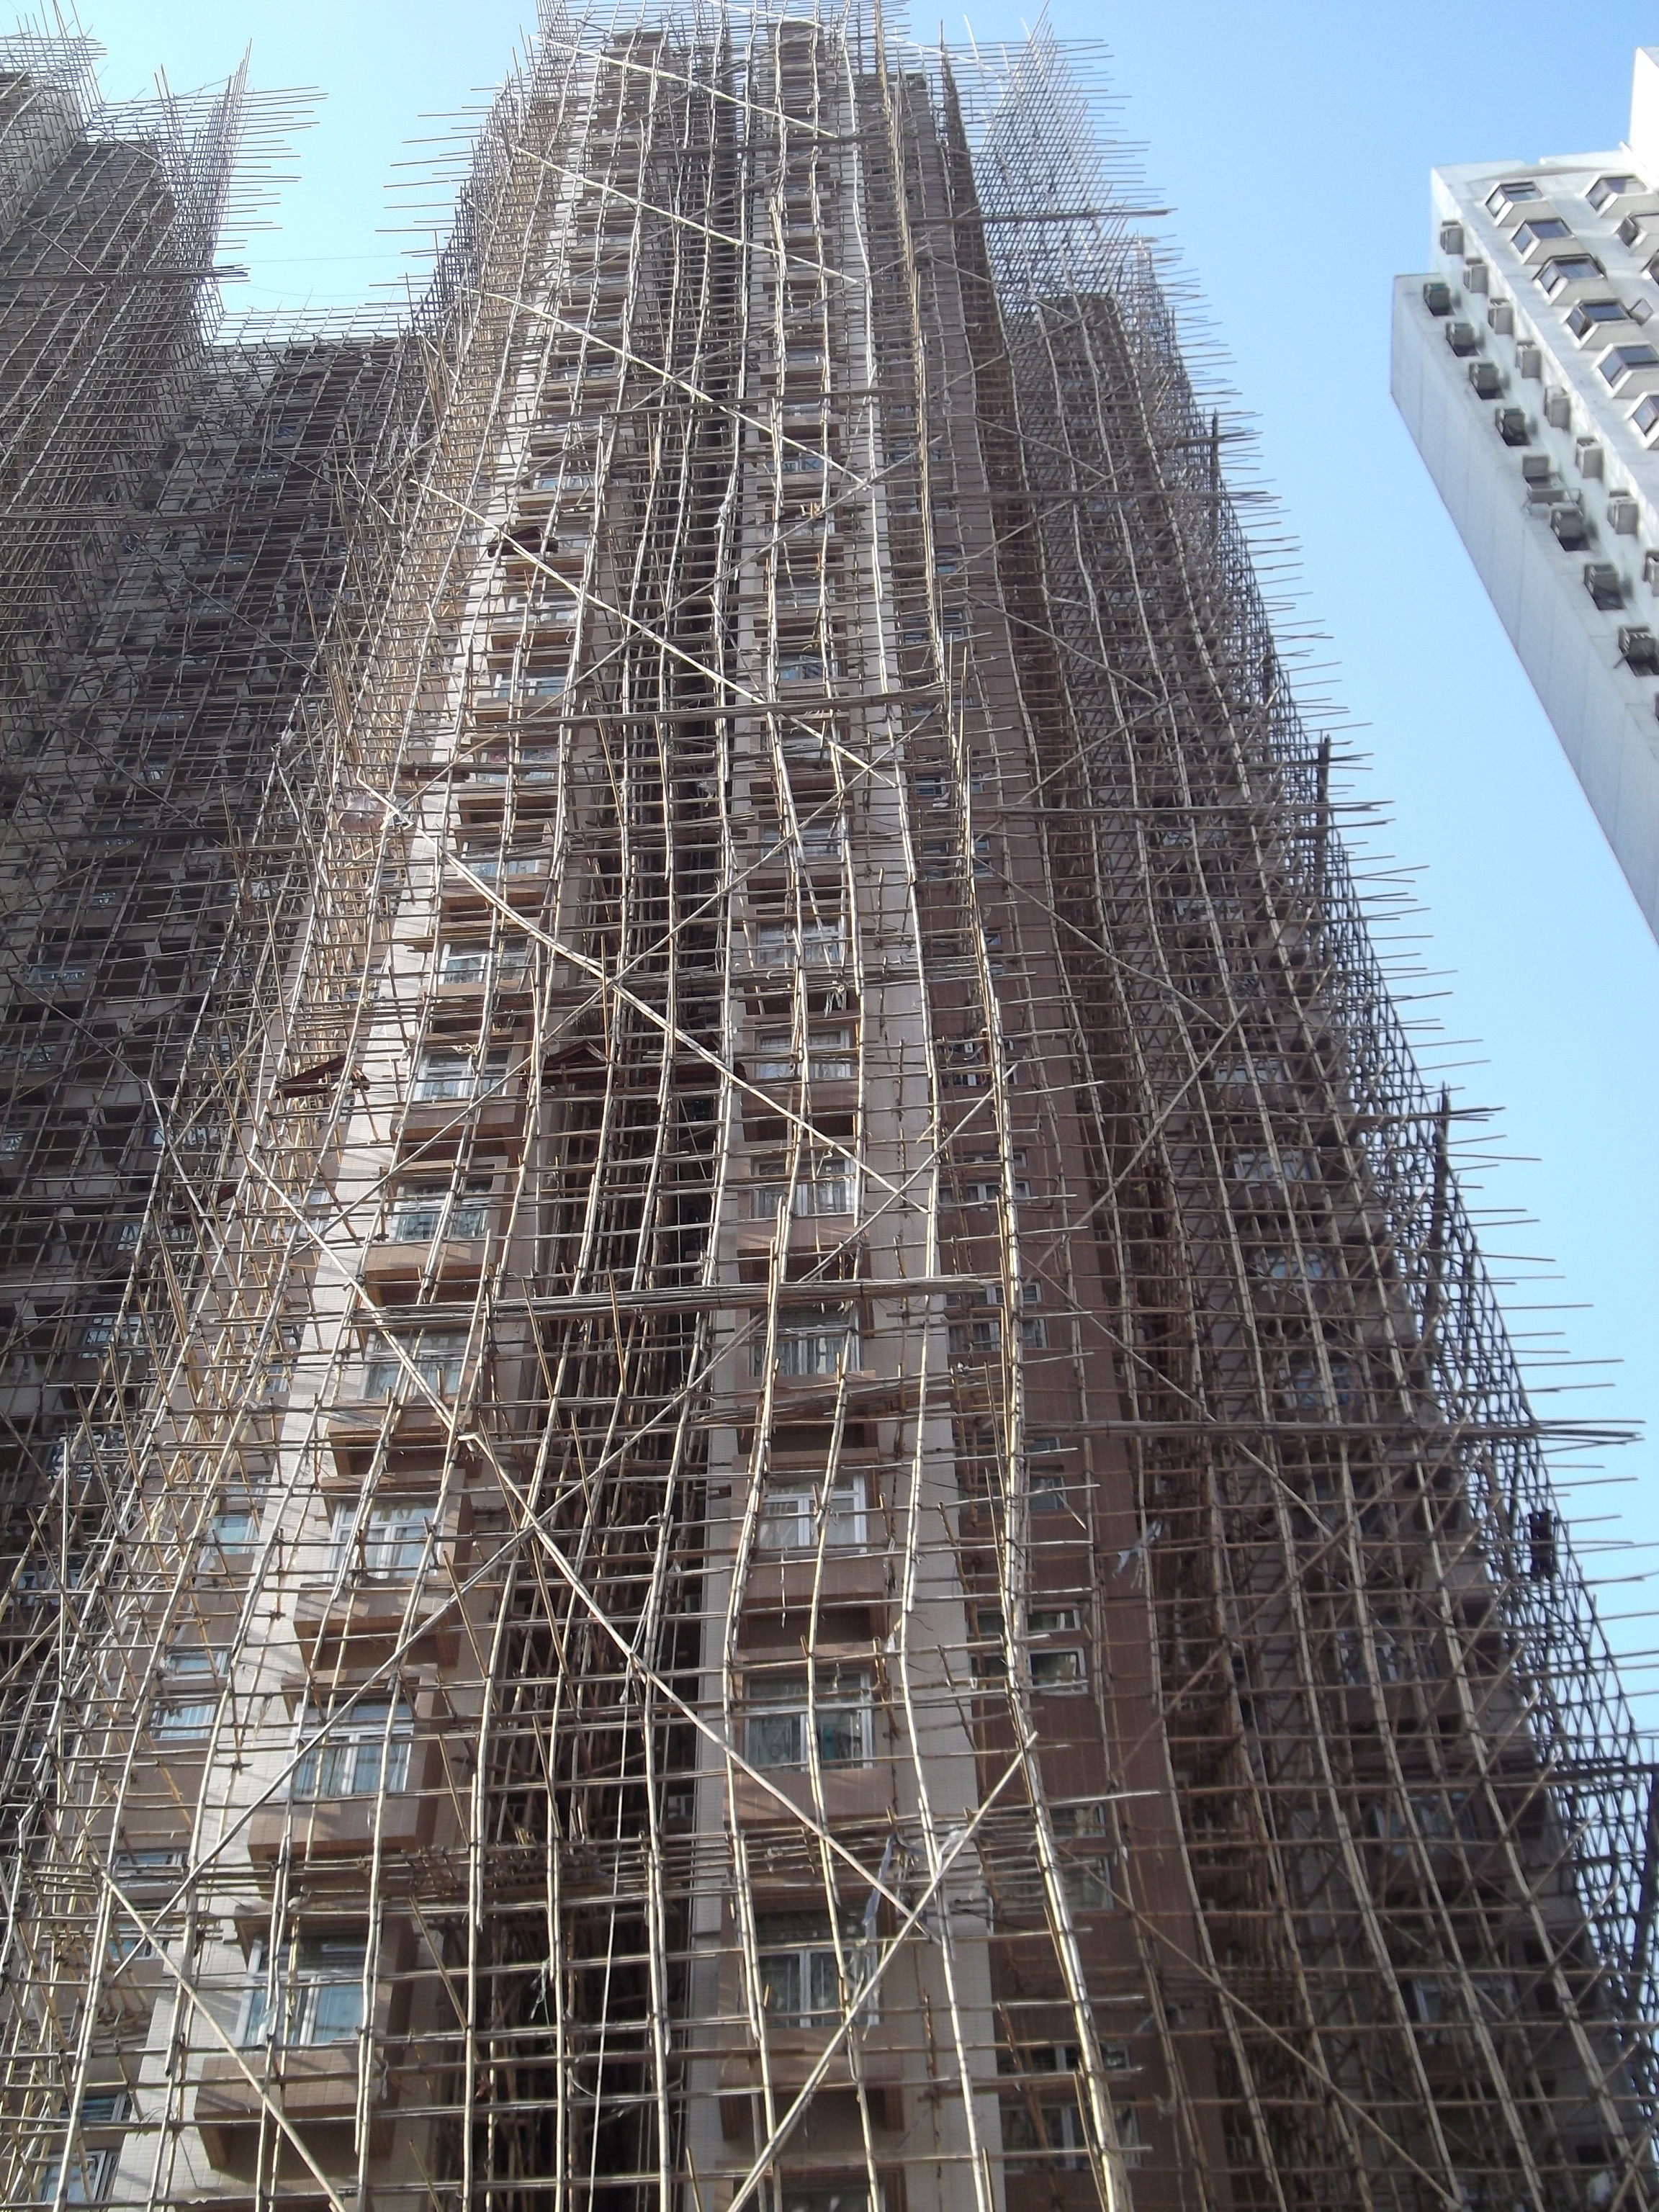 bamboo scaffolding – THE TRAVELLING TRINI